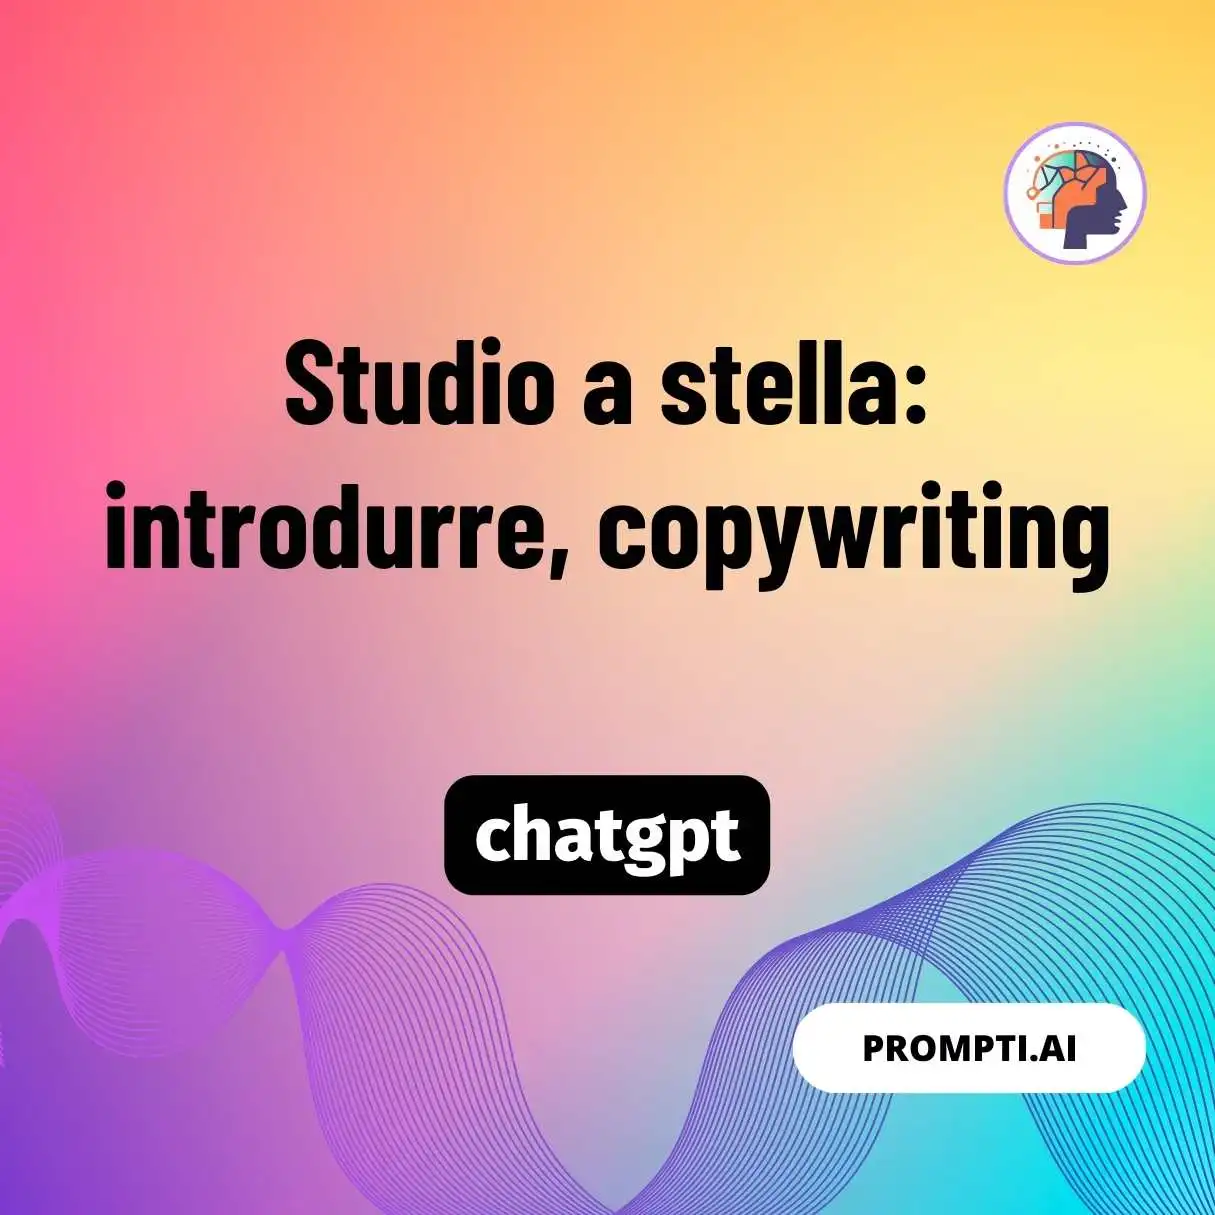 Studio a stella: introdurre, copywriting